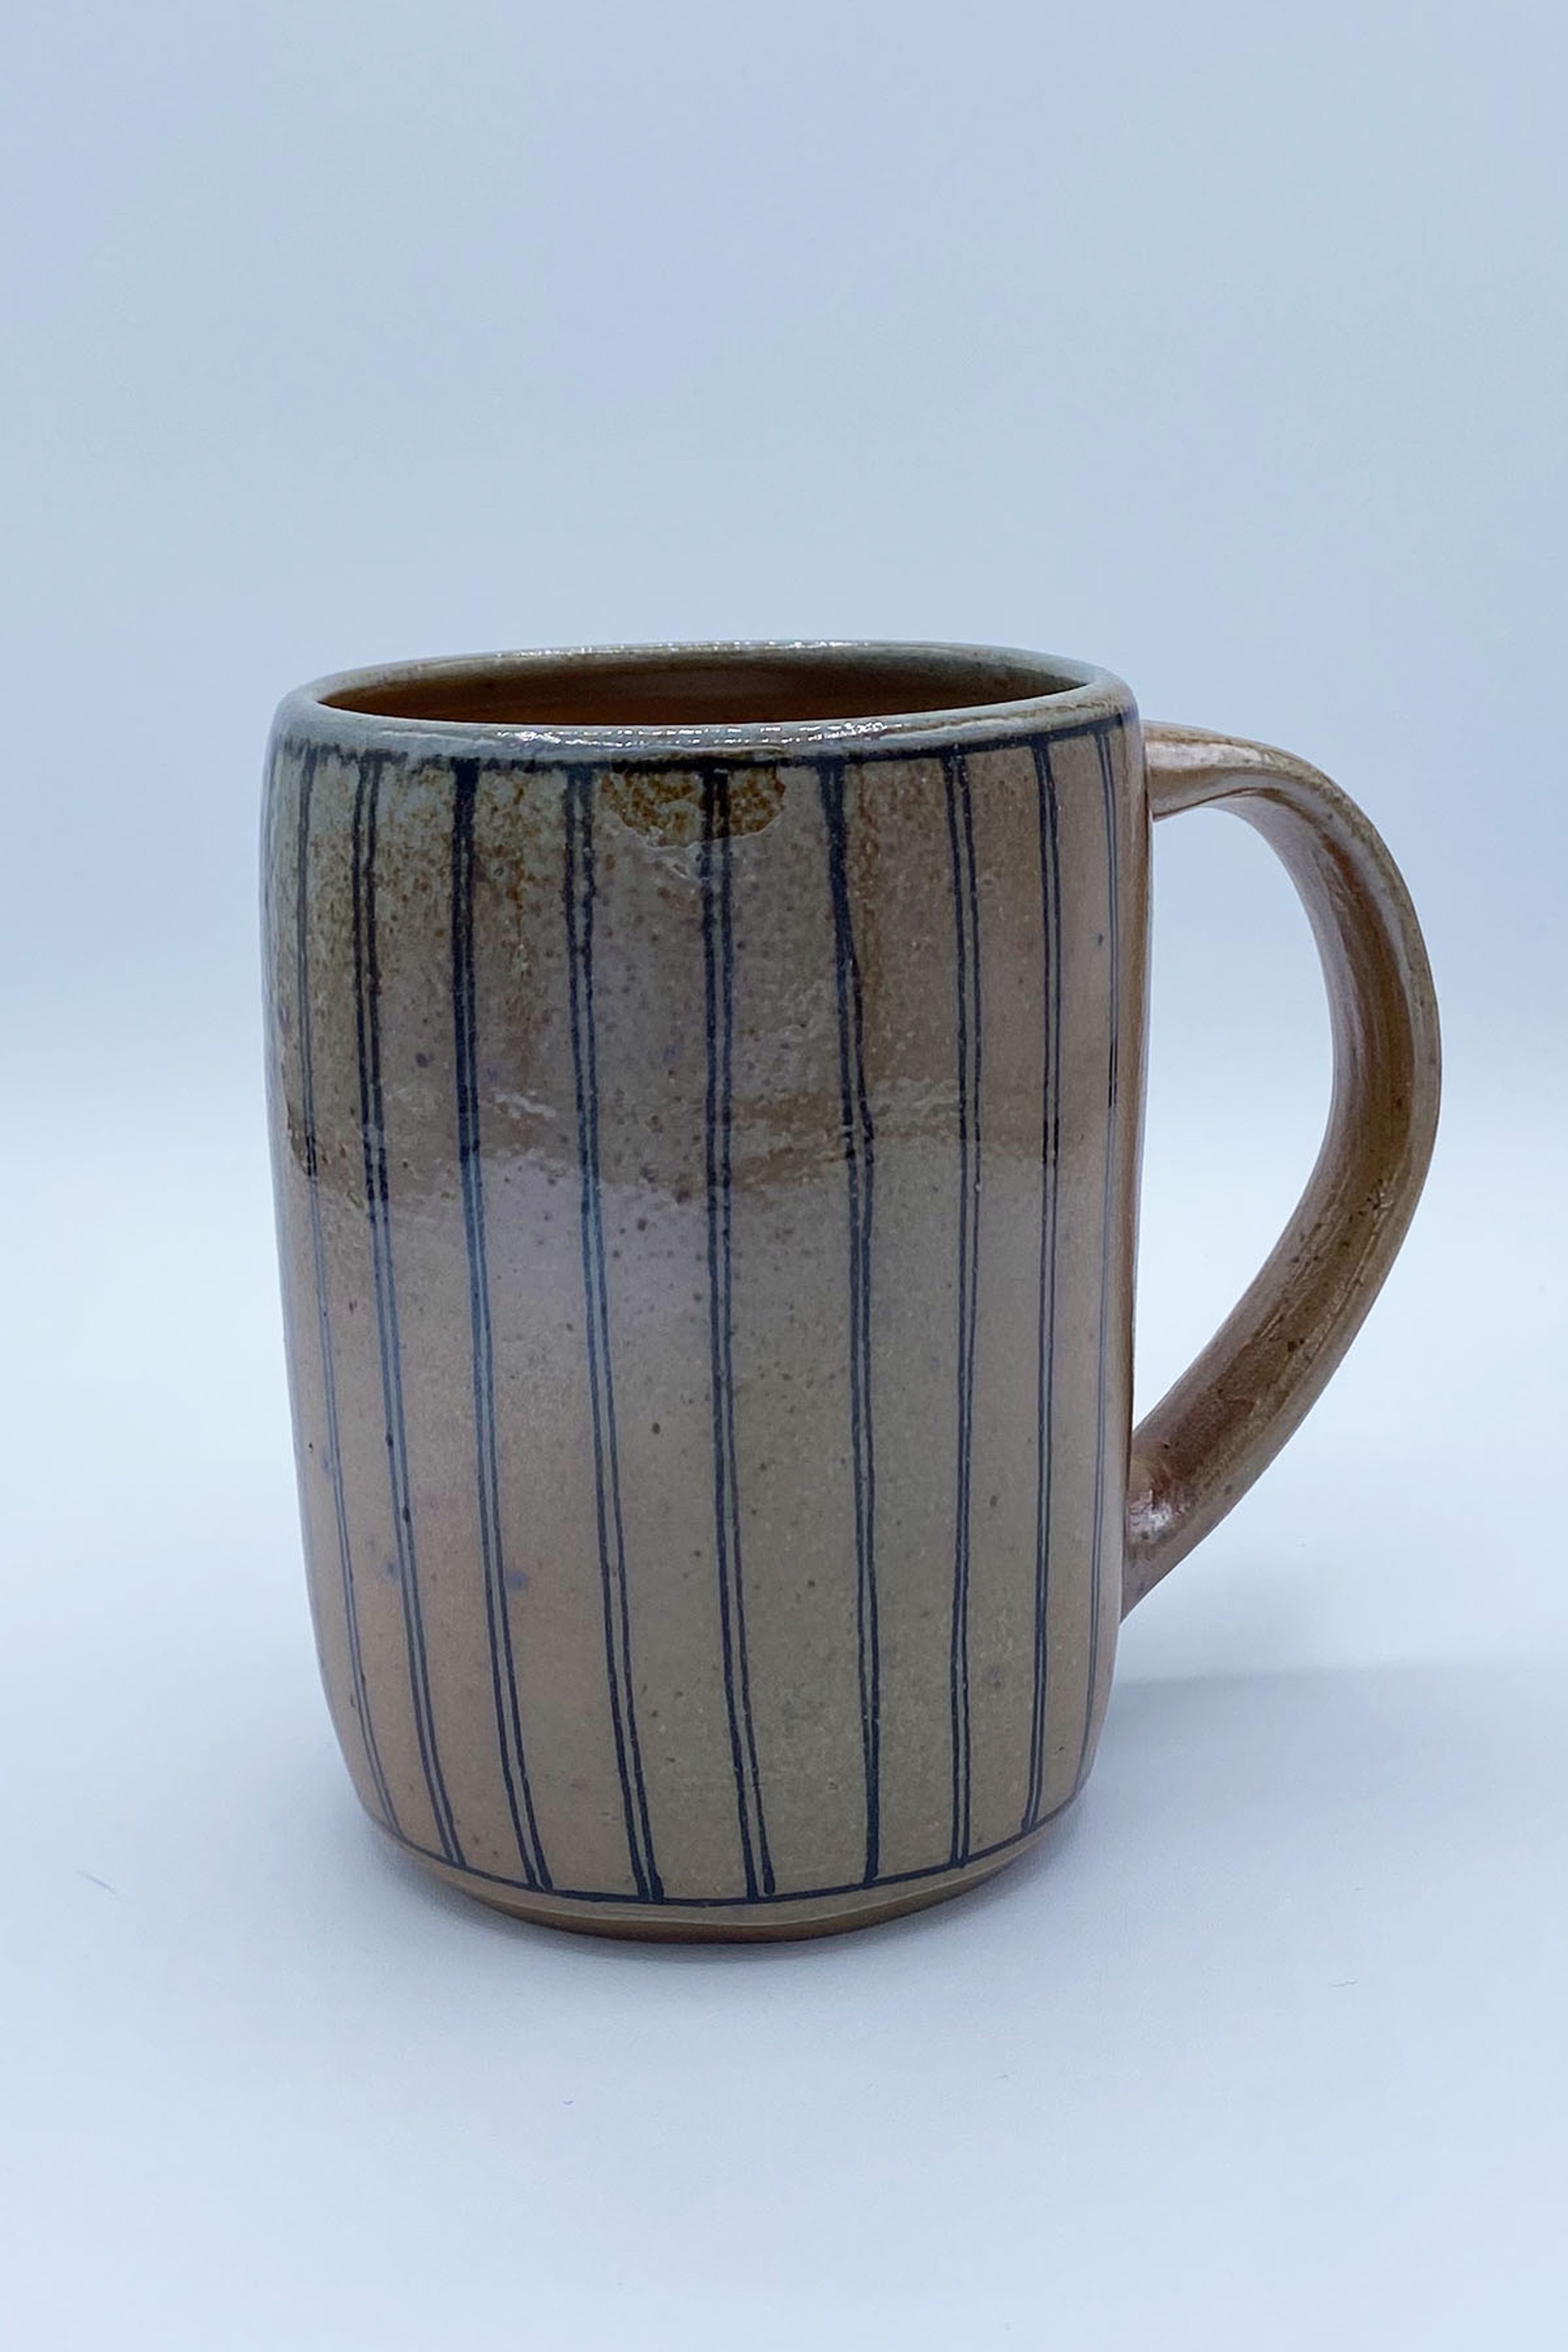 Mug 4 by Laura Cooke